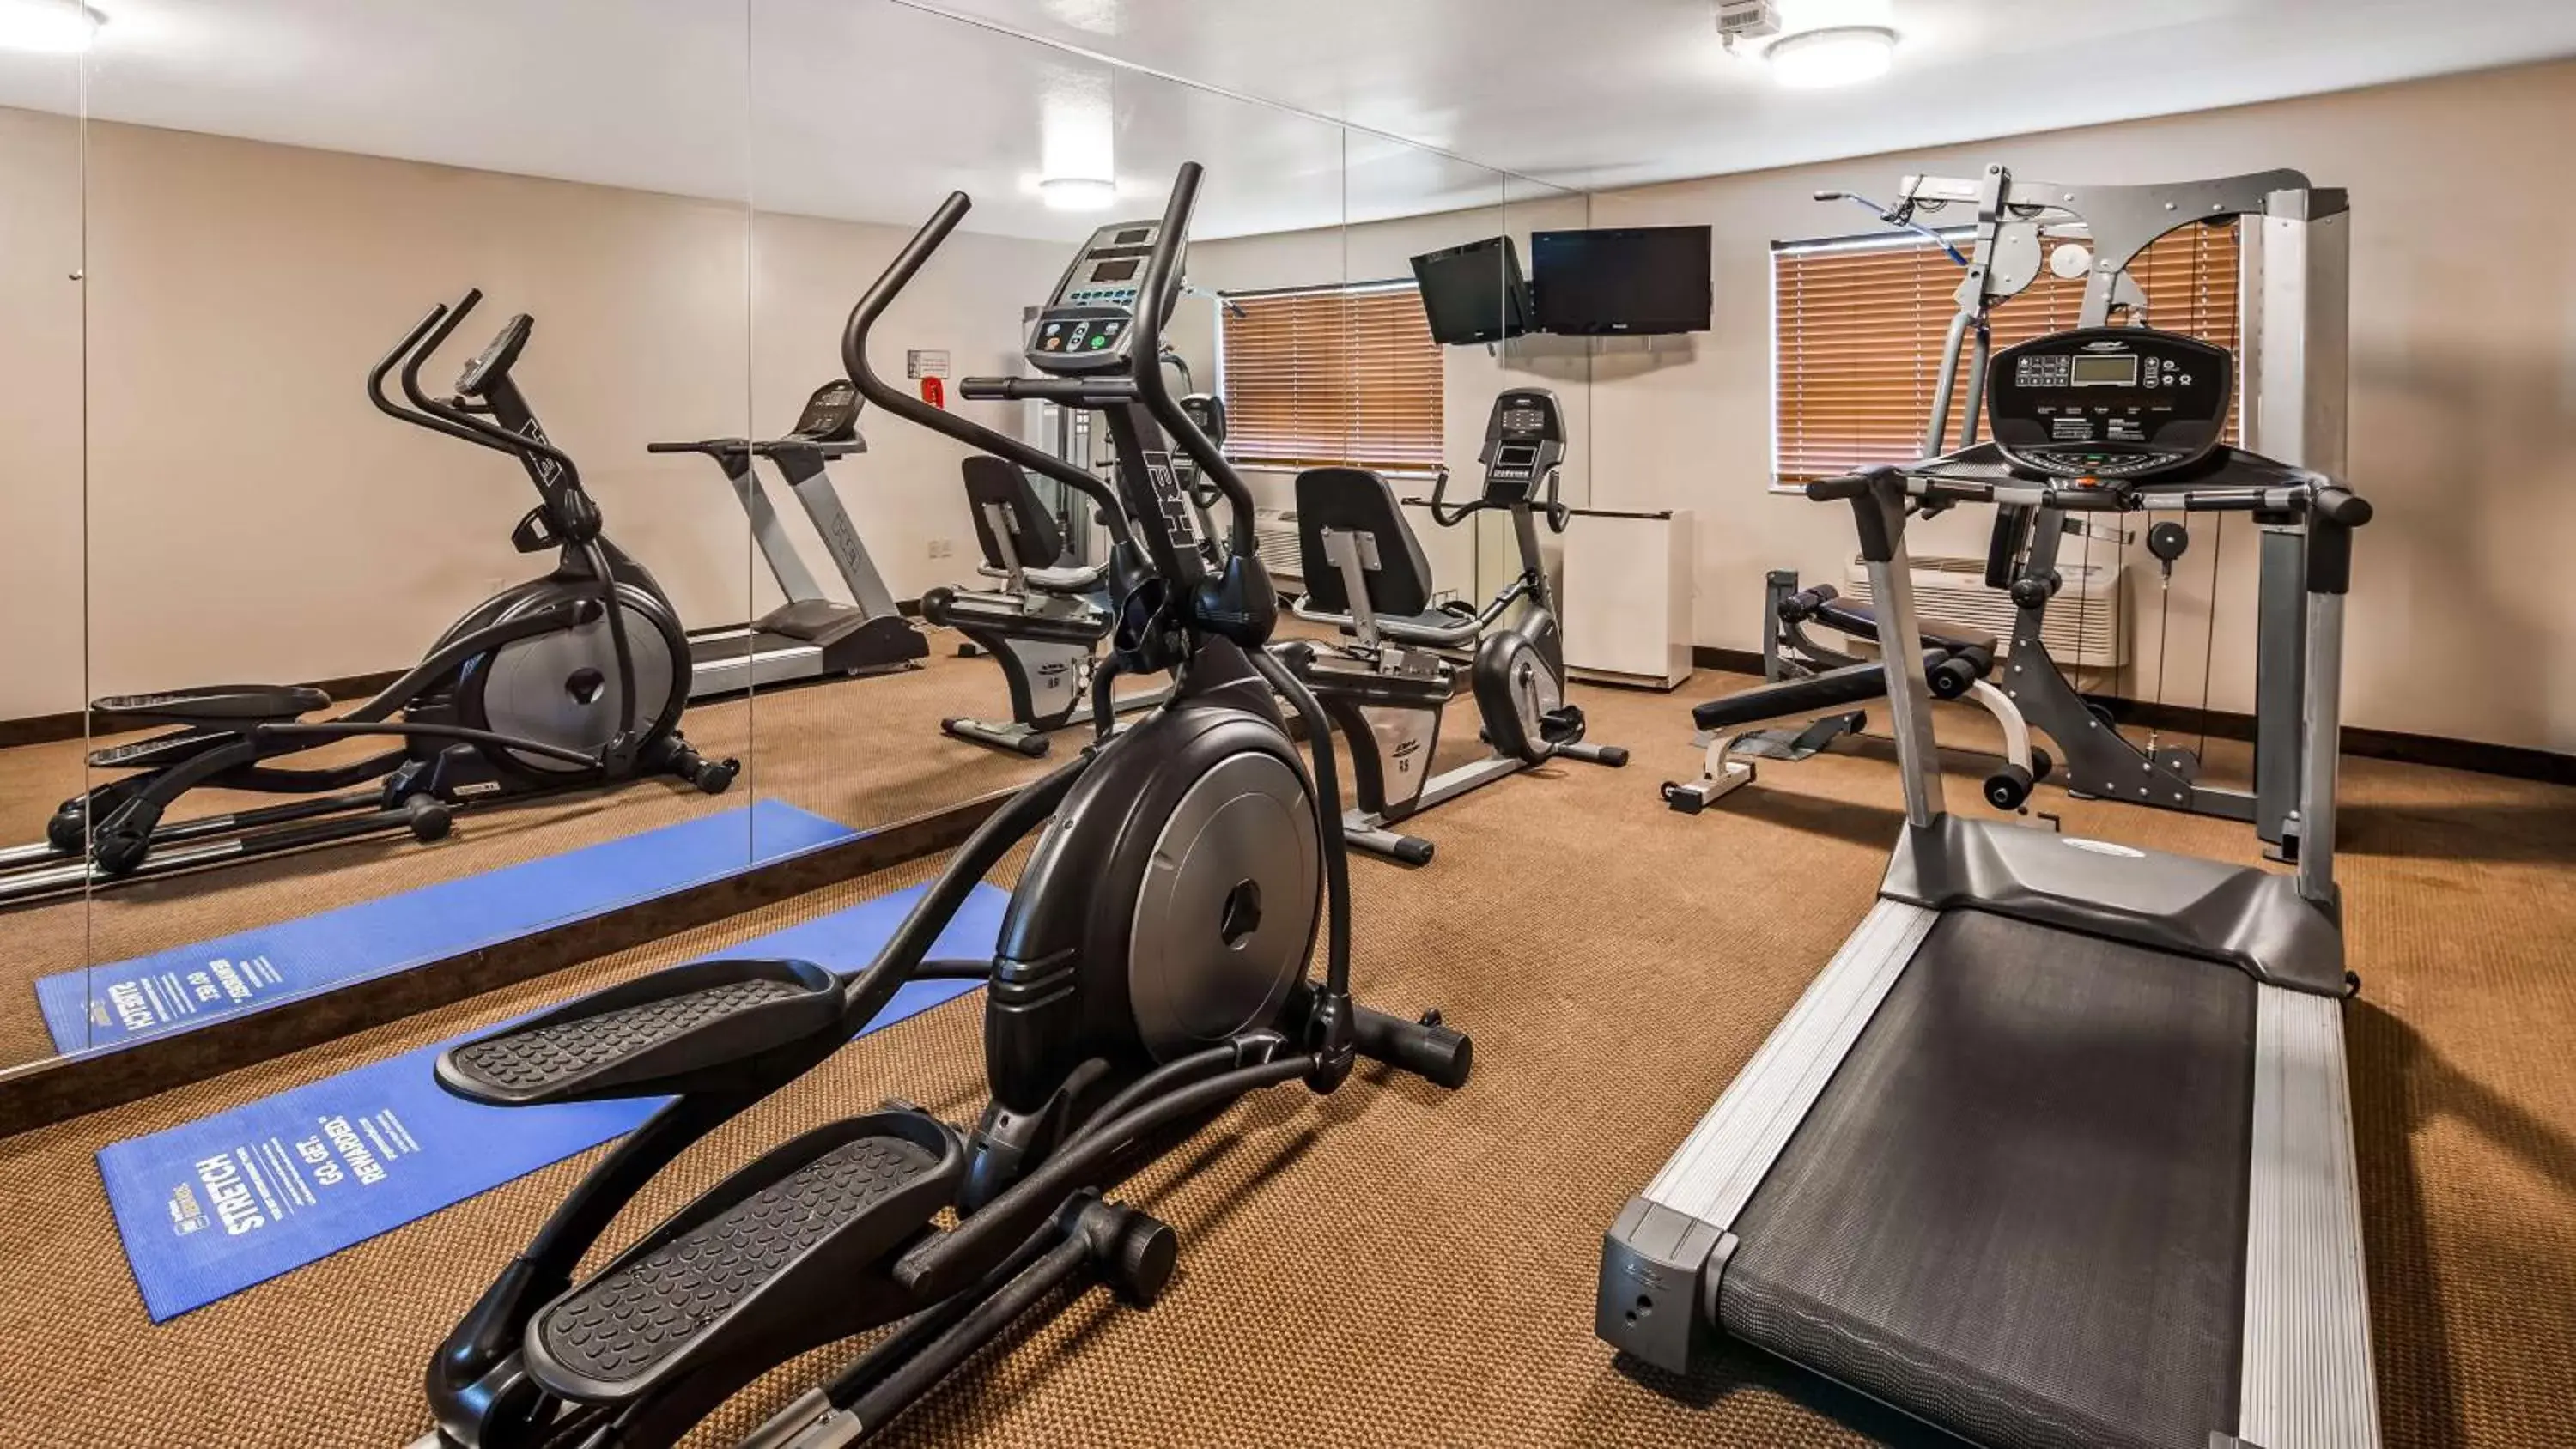 Fitness centre/facilities, Fitness Center/Facilities in Best Western Wittenberg Inn